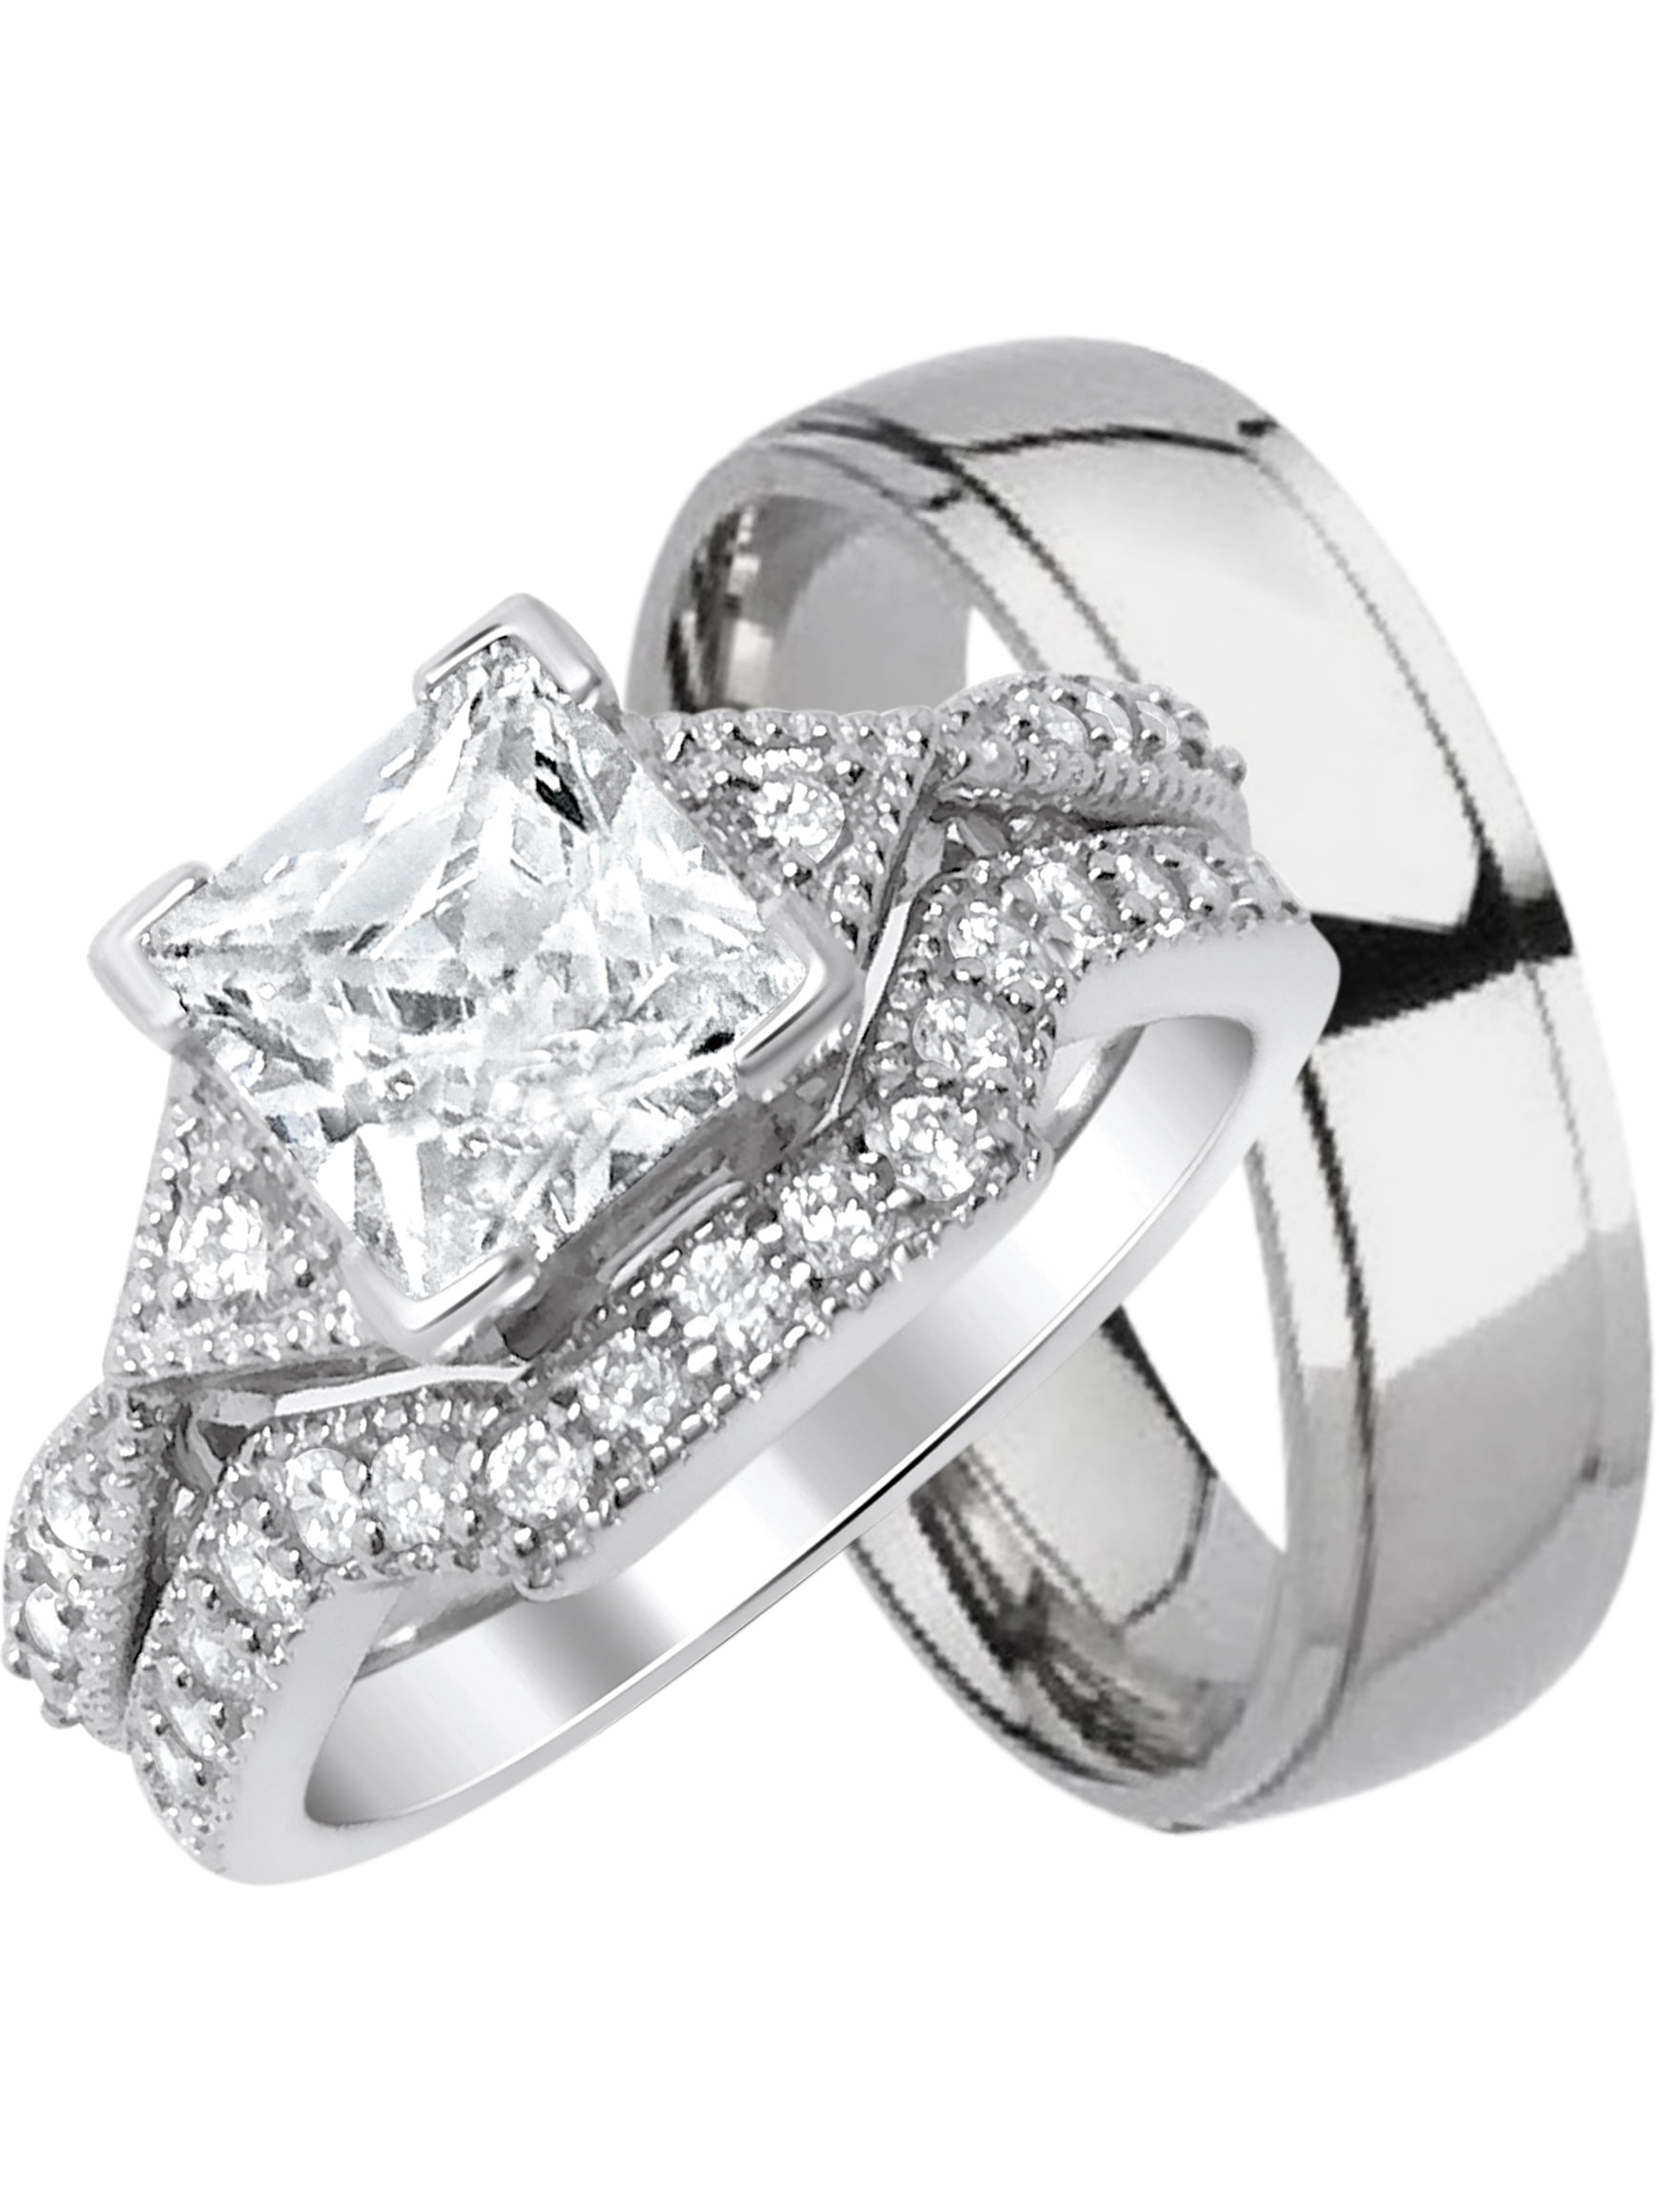 LaRaso & Co His and Hers Trio Wedding Ring Set Matching Titanium